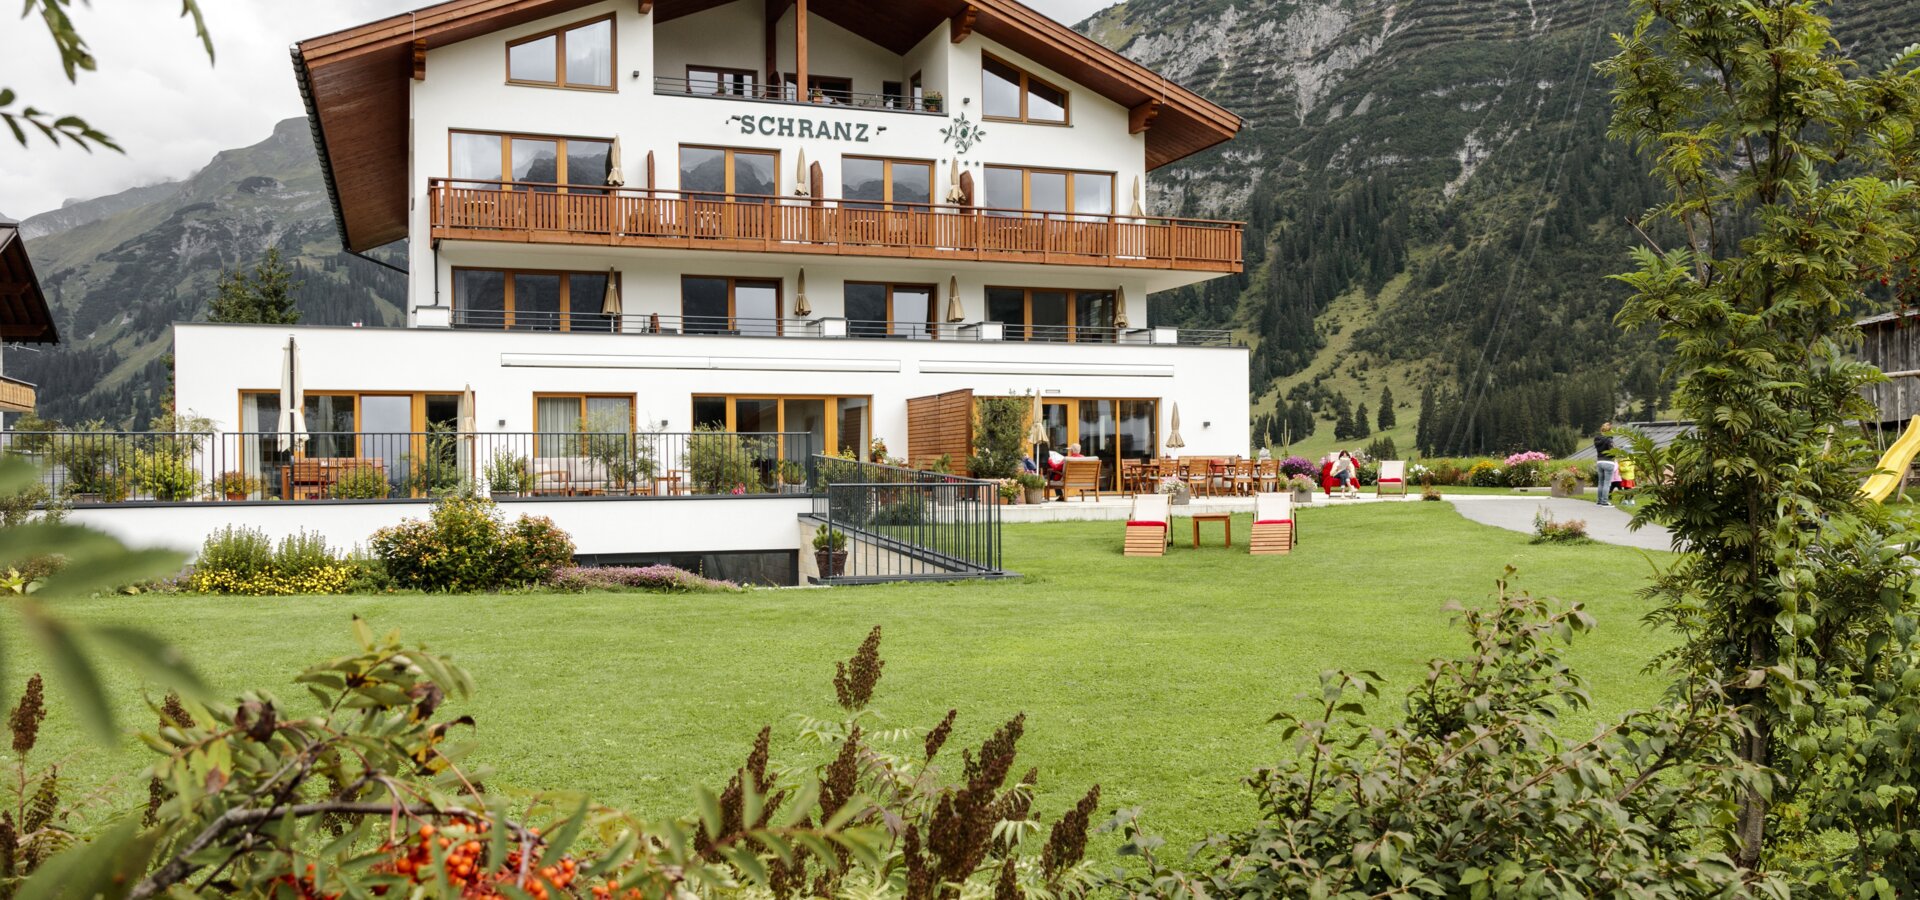 Unterkunft Schranz in Lech am Arlberg